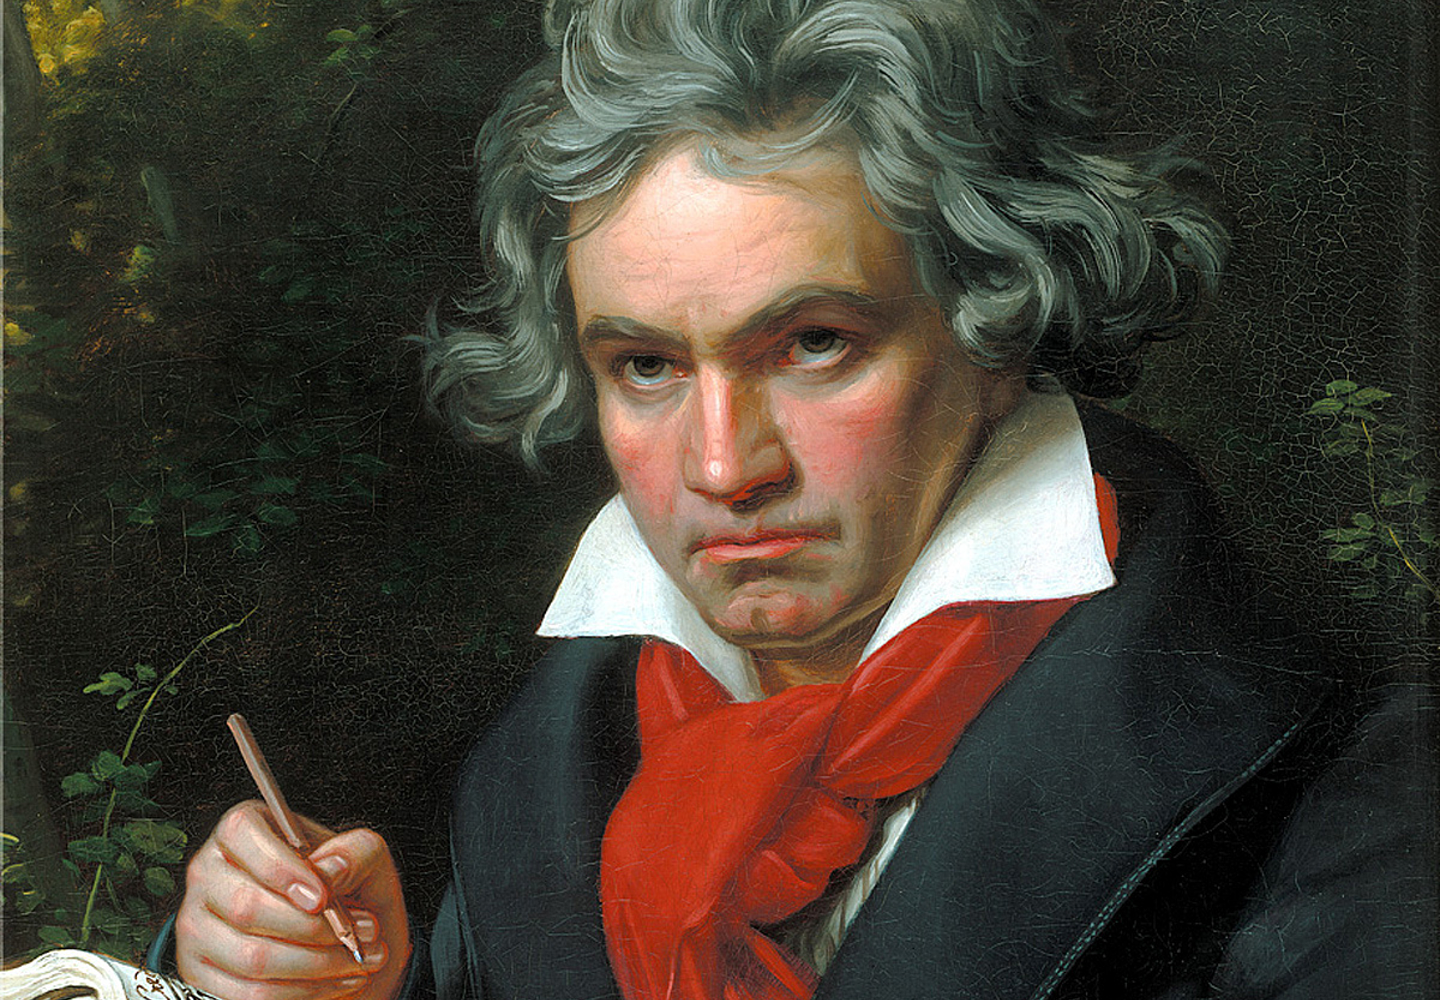 Beethoven’s “Kreutzer” Violin Sonata